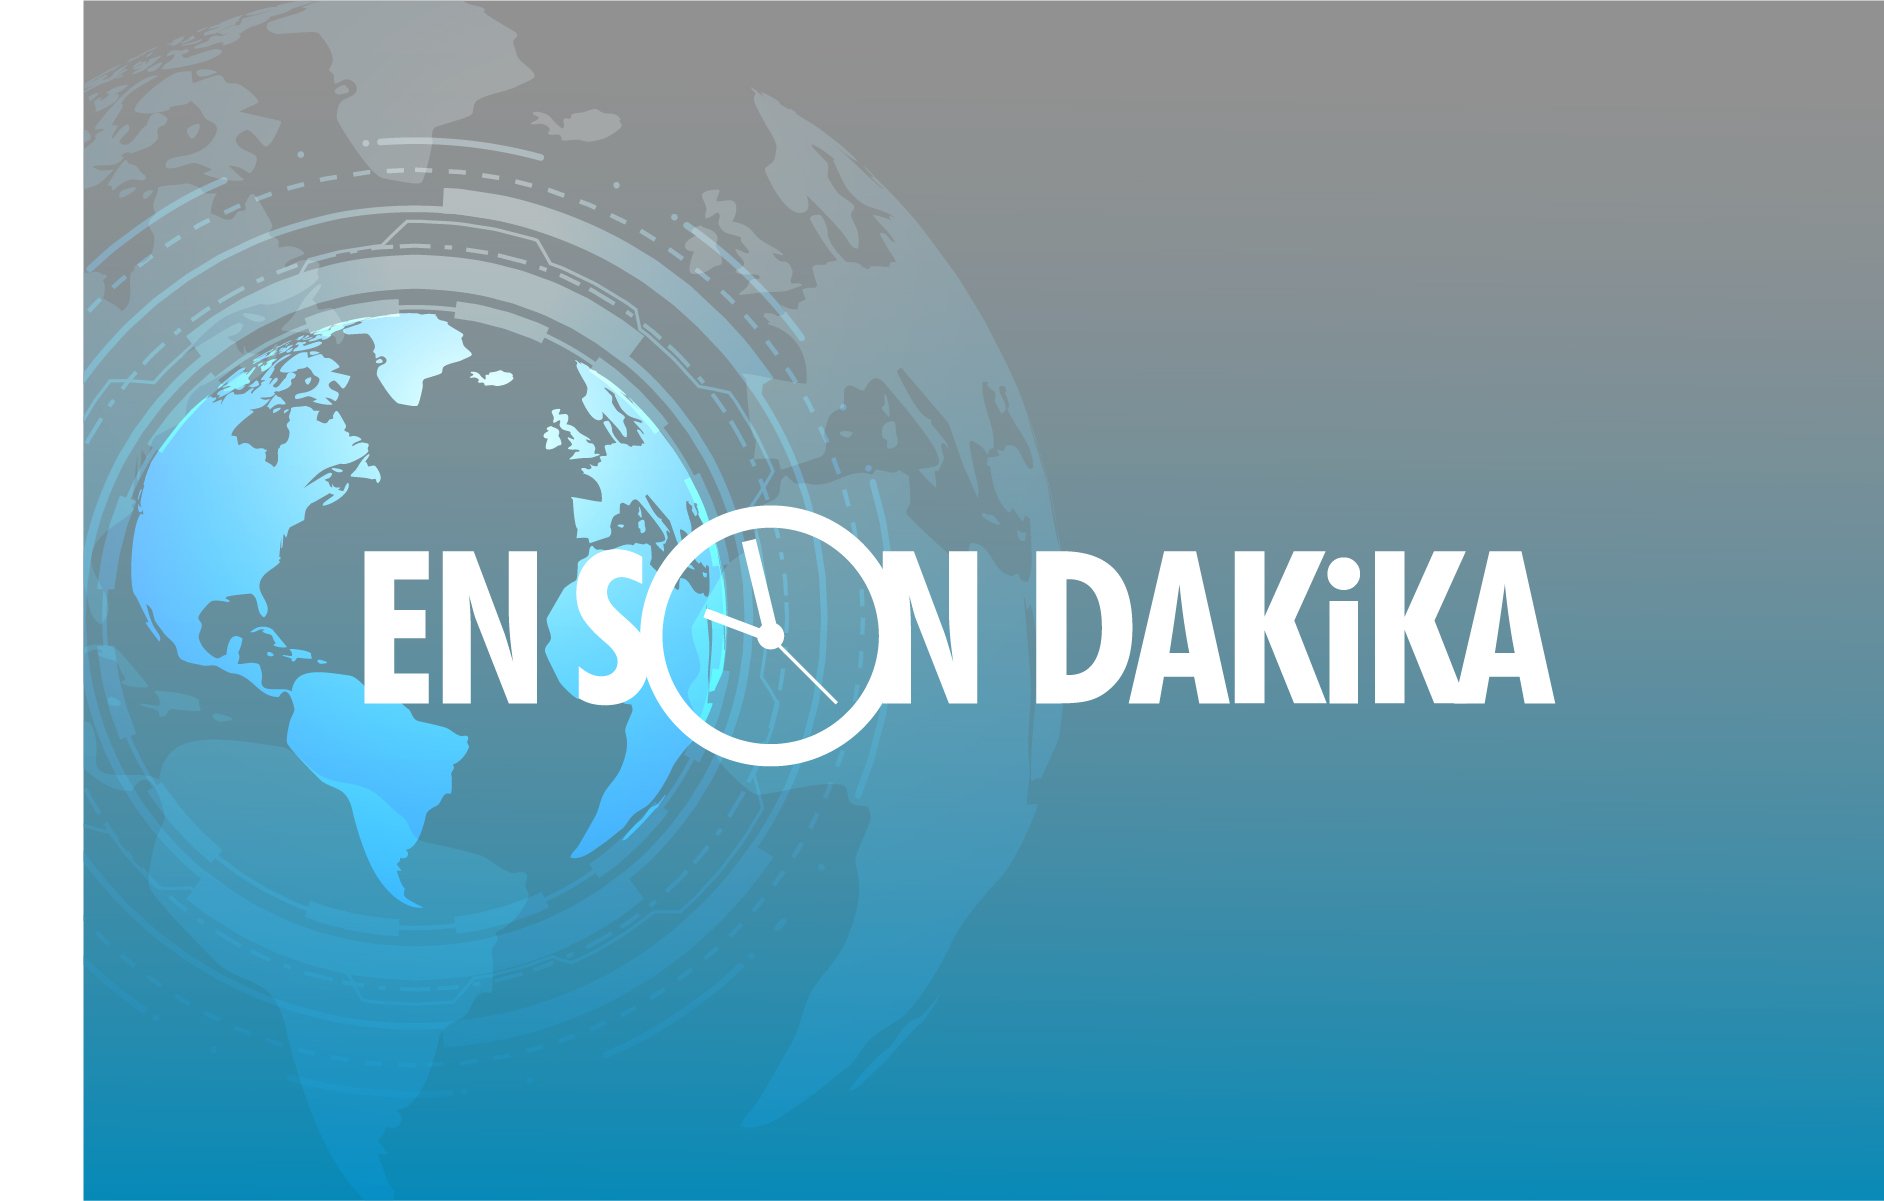 Fatih Karagümrük-Trabzonspor maçının ardından